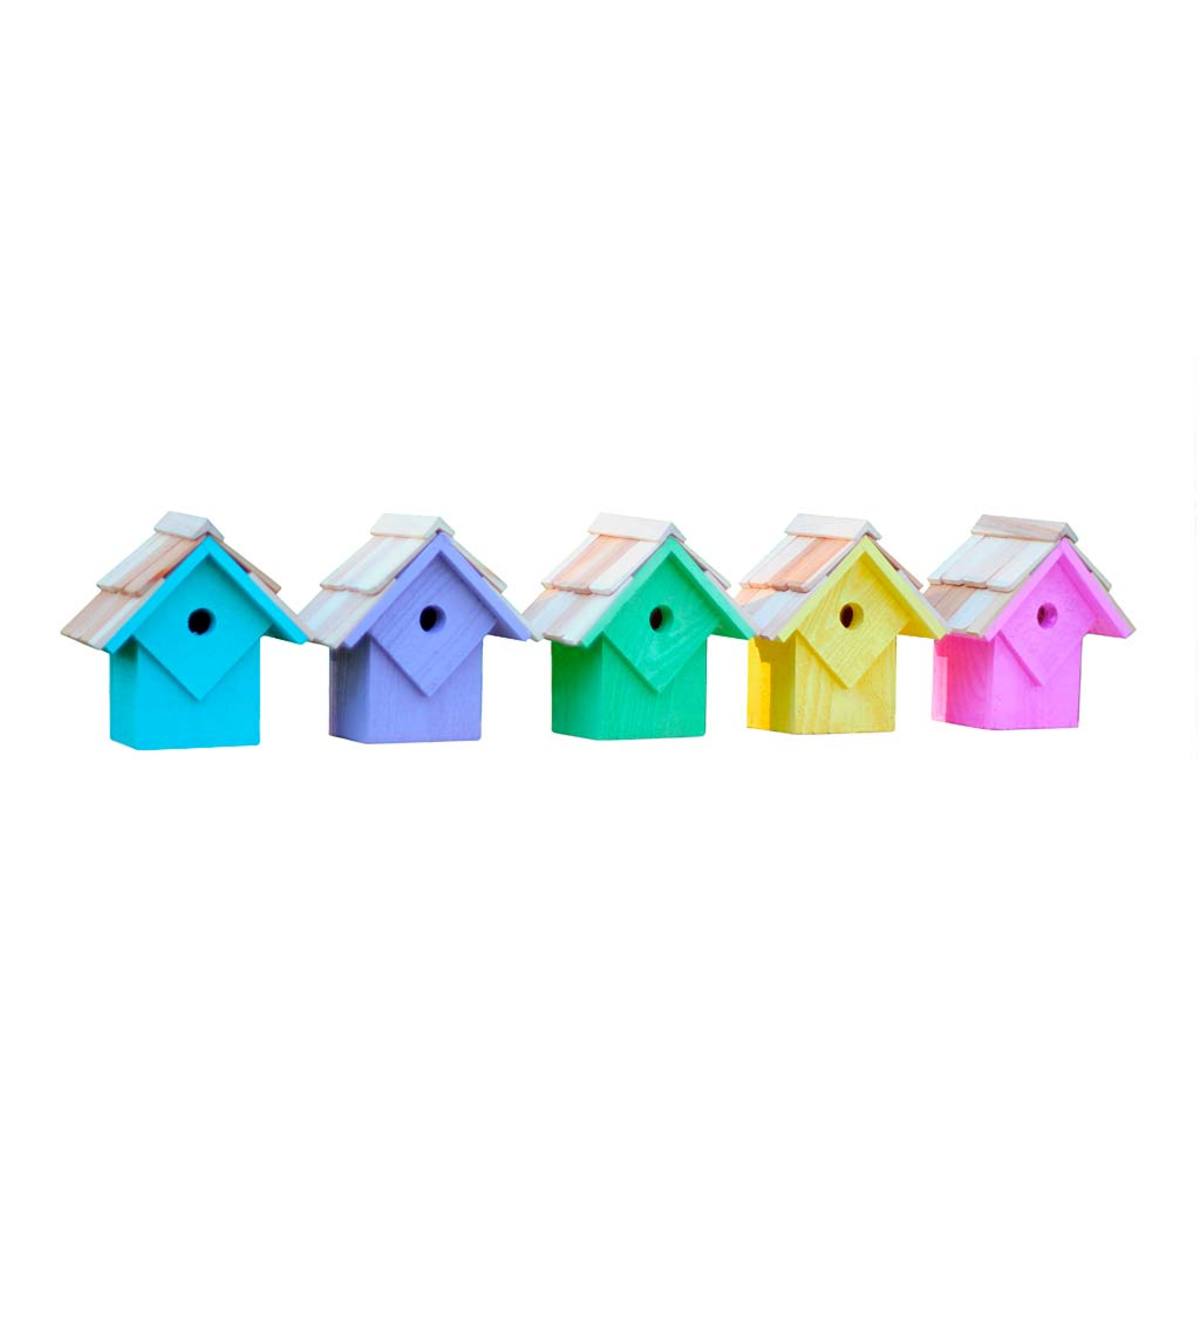 Summer Home Birdhouses, Set of 5 - Pastels